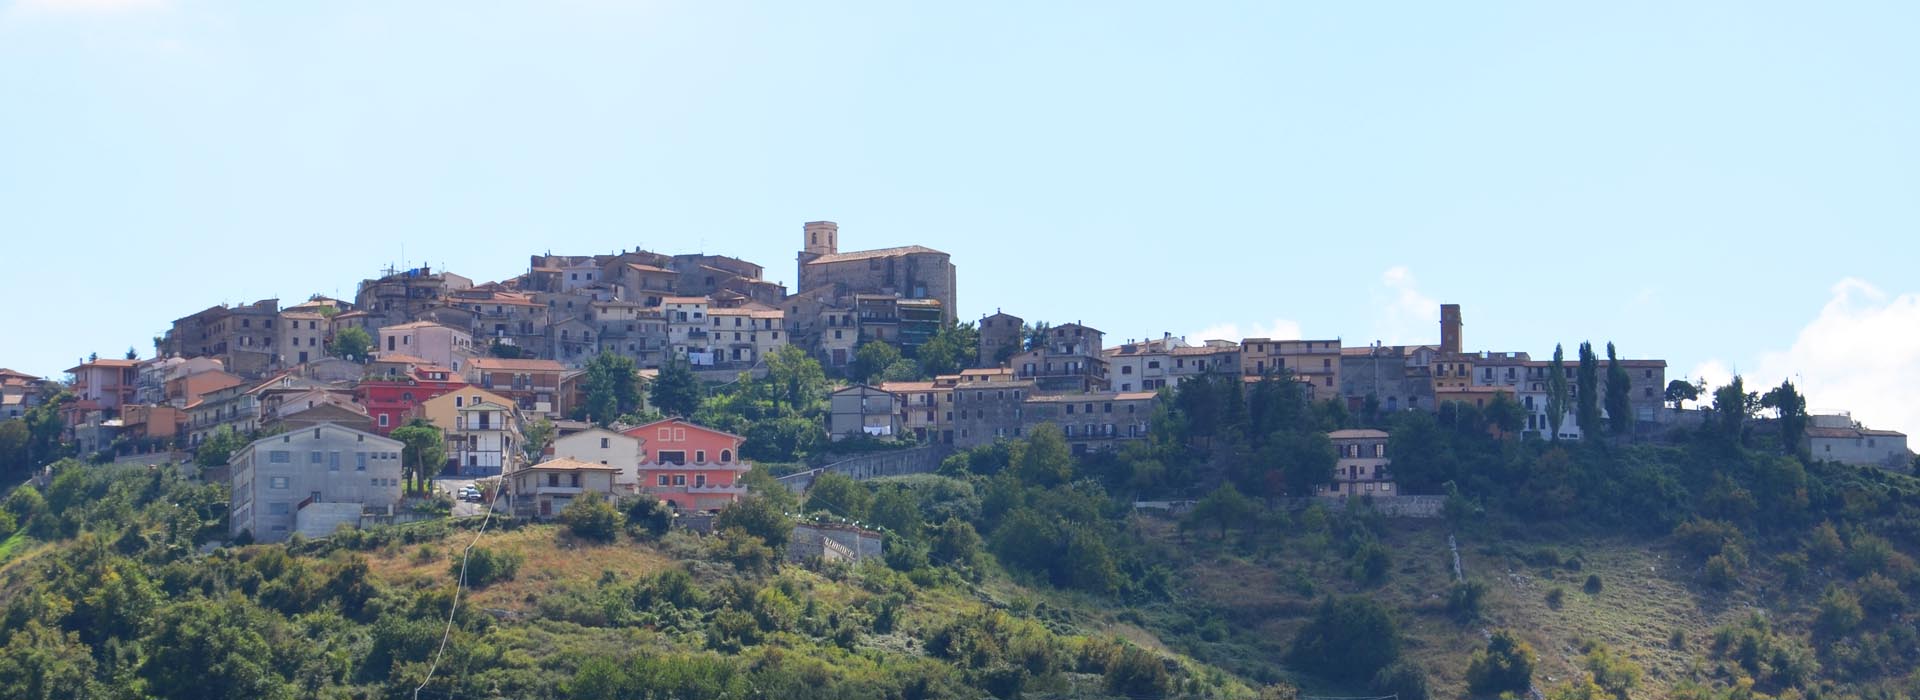 Rocca Massima